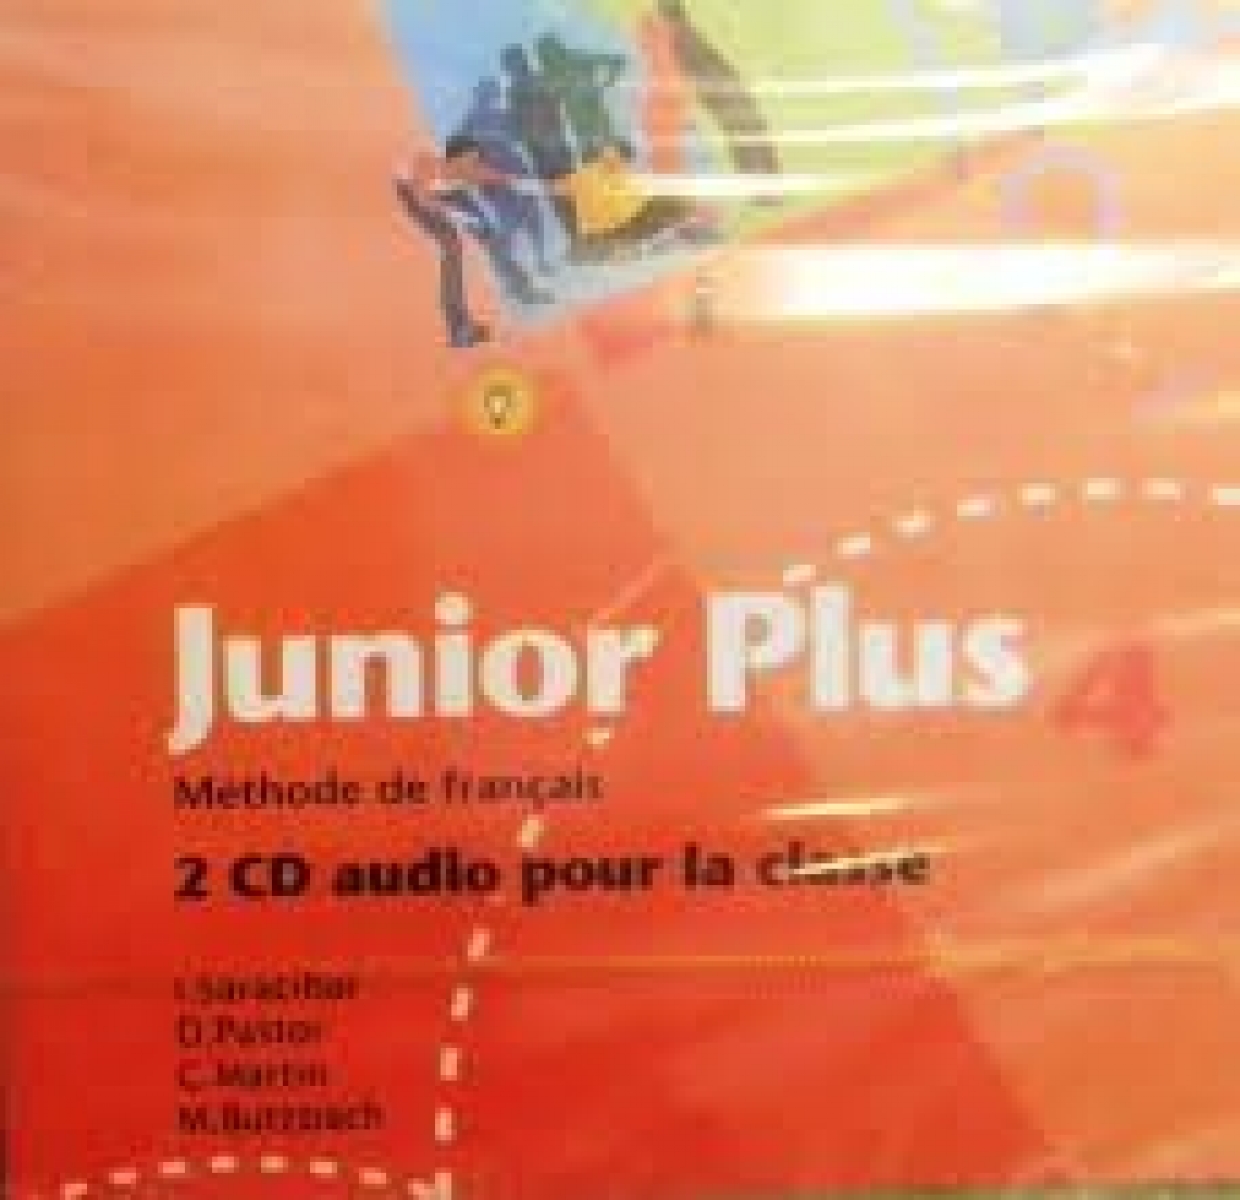 Michele Butzbach, Carmen Martin, Dolores Pastor, Inmaculada Saracibar Junior Plus 4 - 2 CD audio collectifs () 